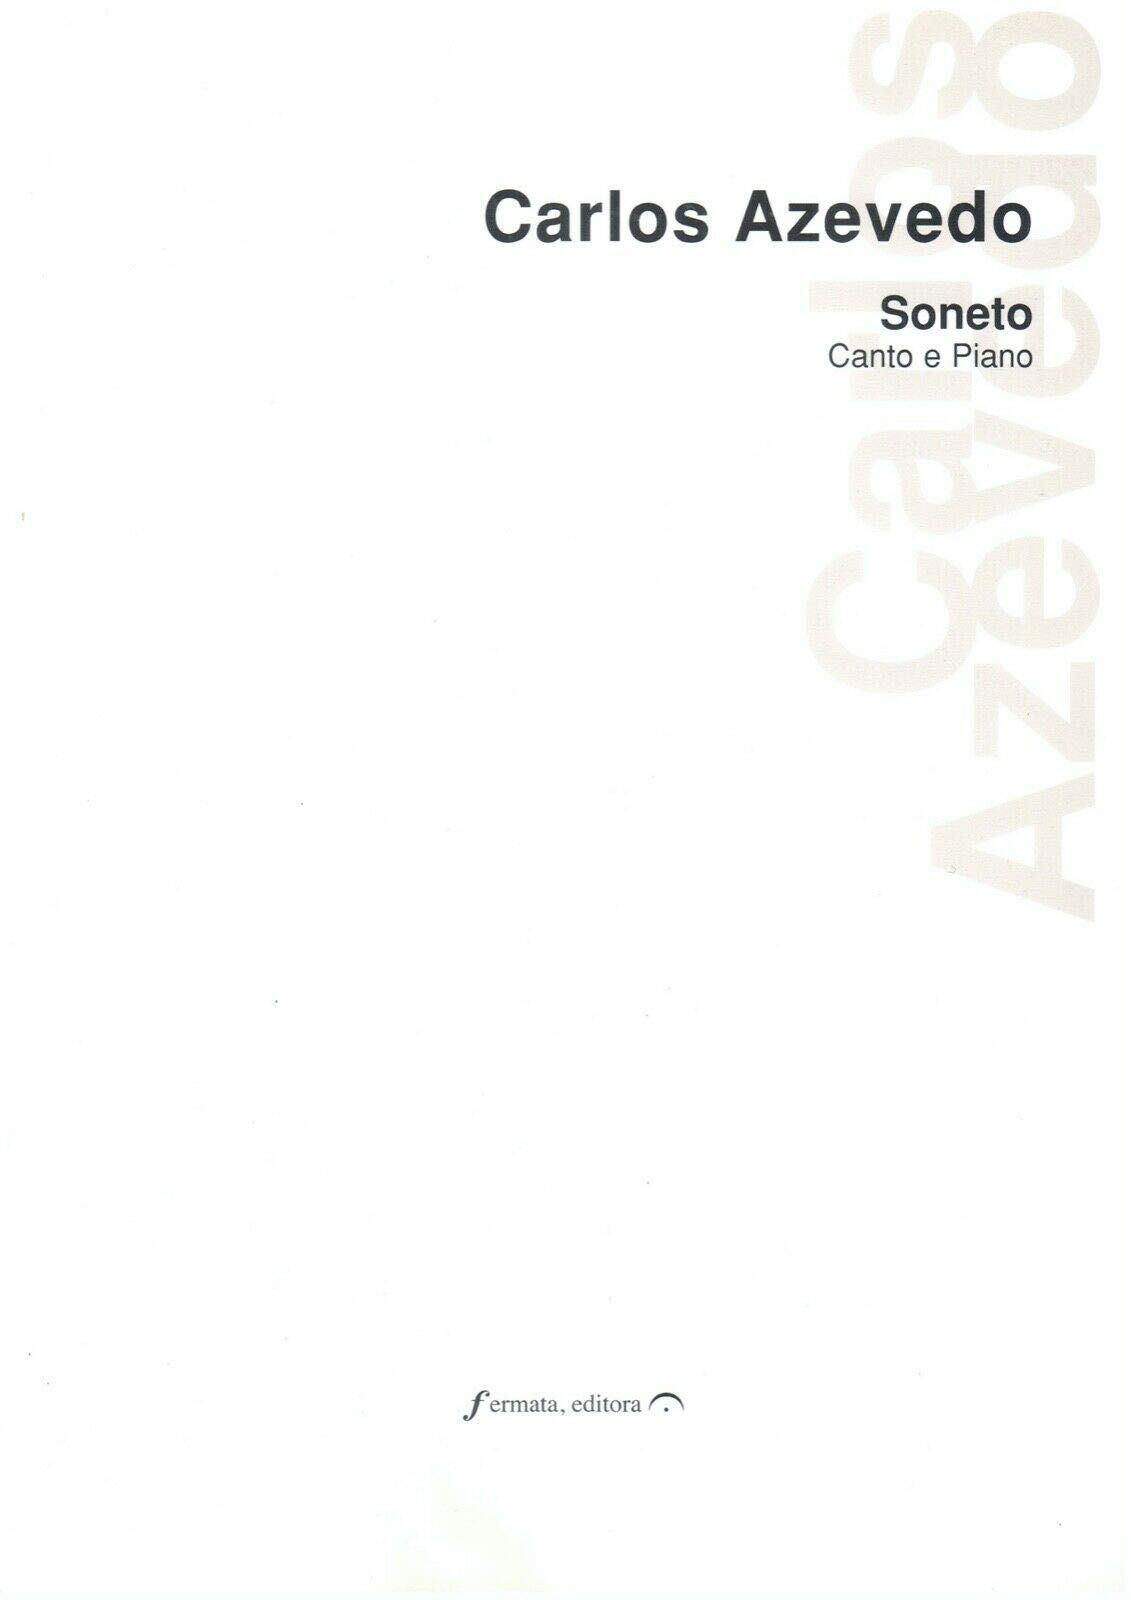 Carlos Azevedo - Soneto para Canto e Piano (Partitura)